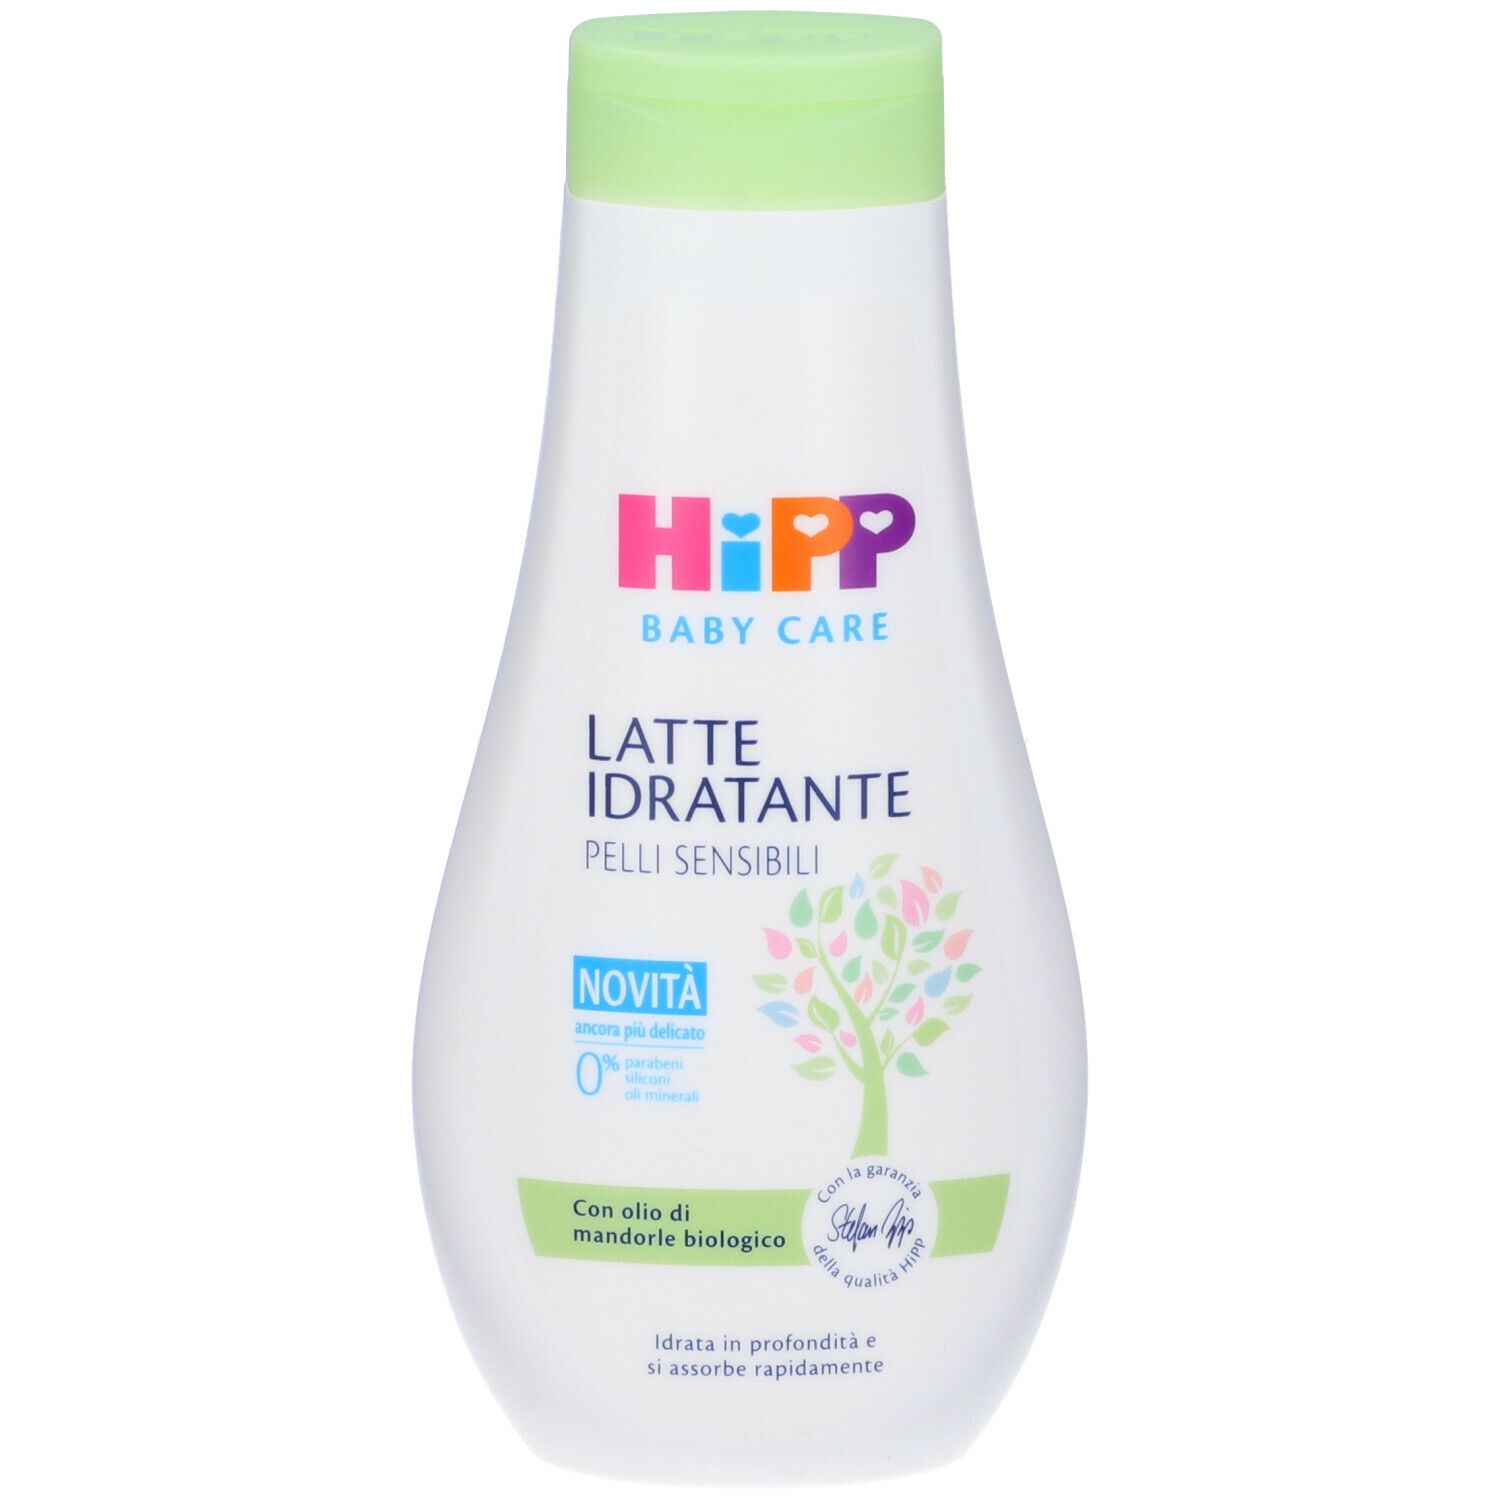 Image of Hipp Baby Care Latte Idratante